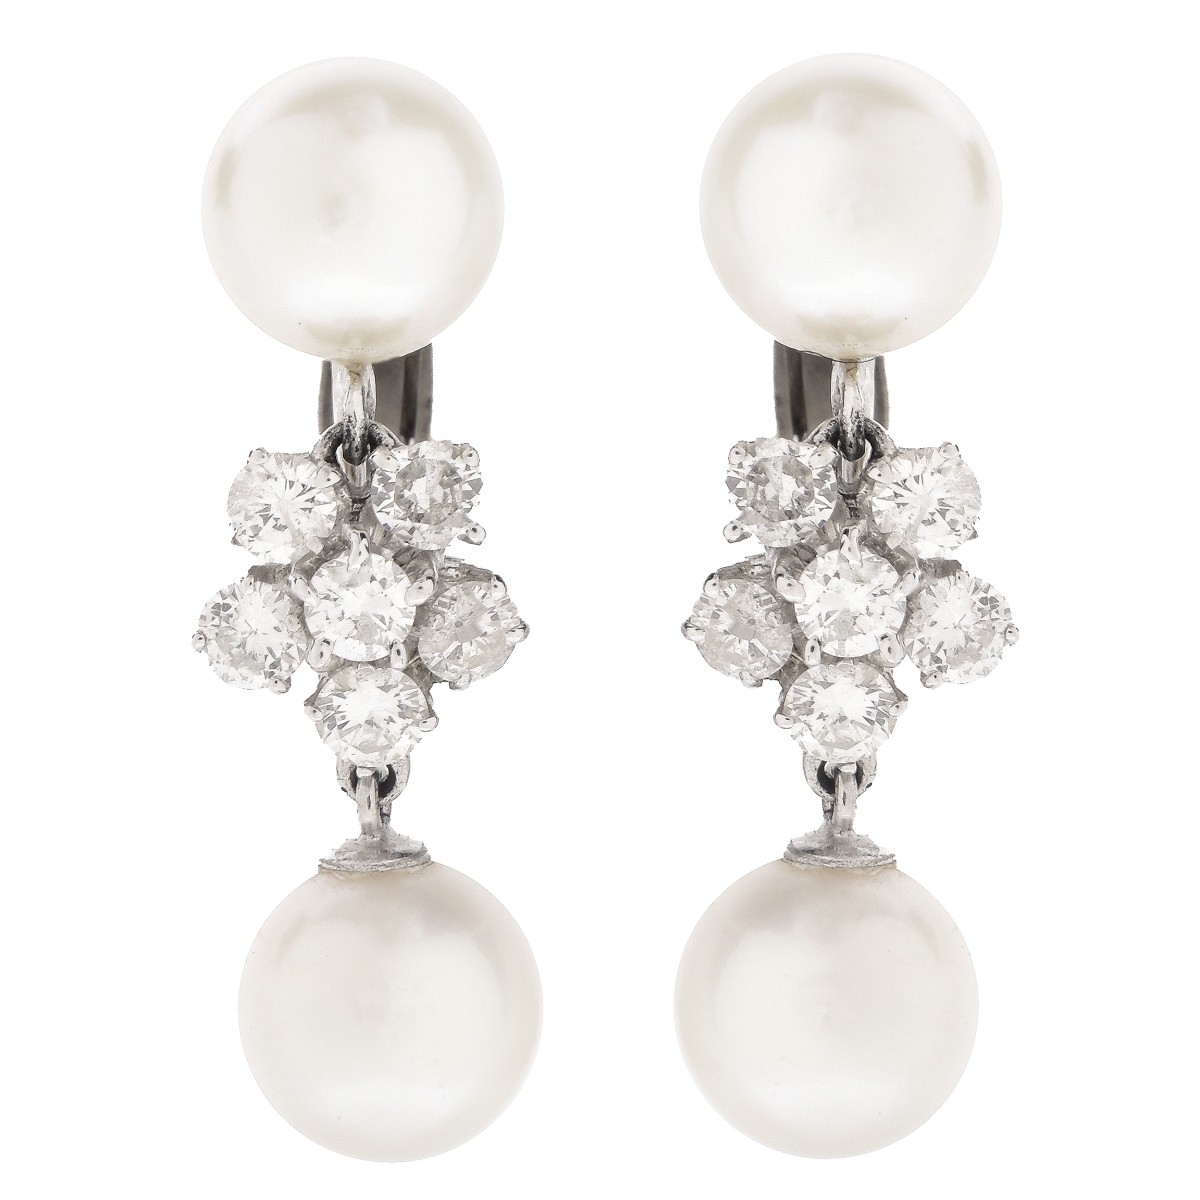 Vintage Pearl and Diamond Earrings